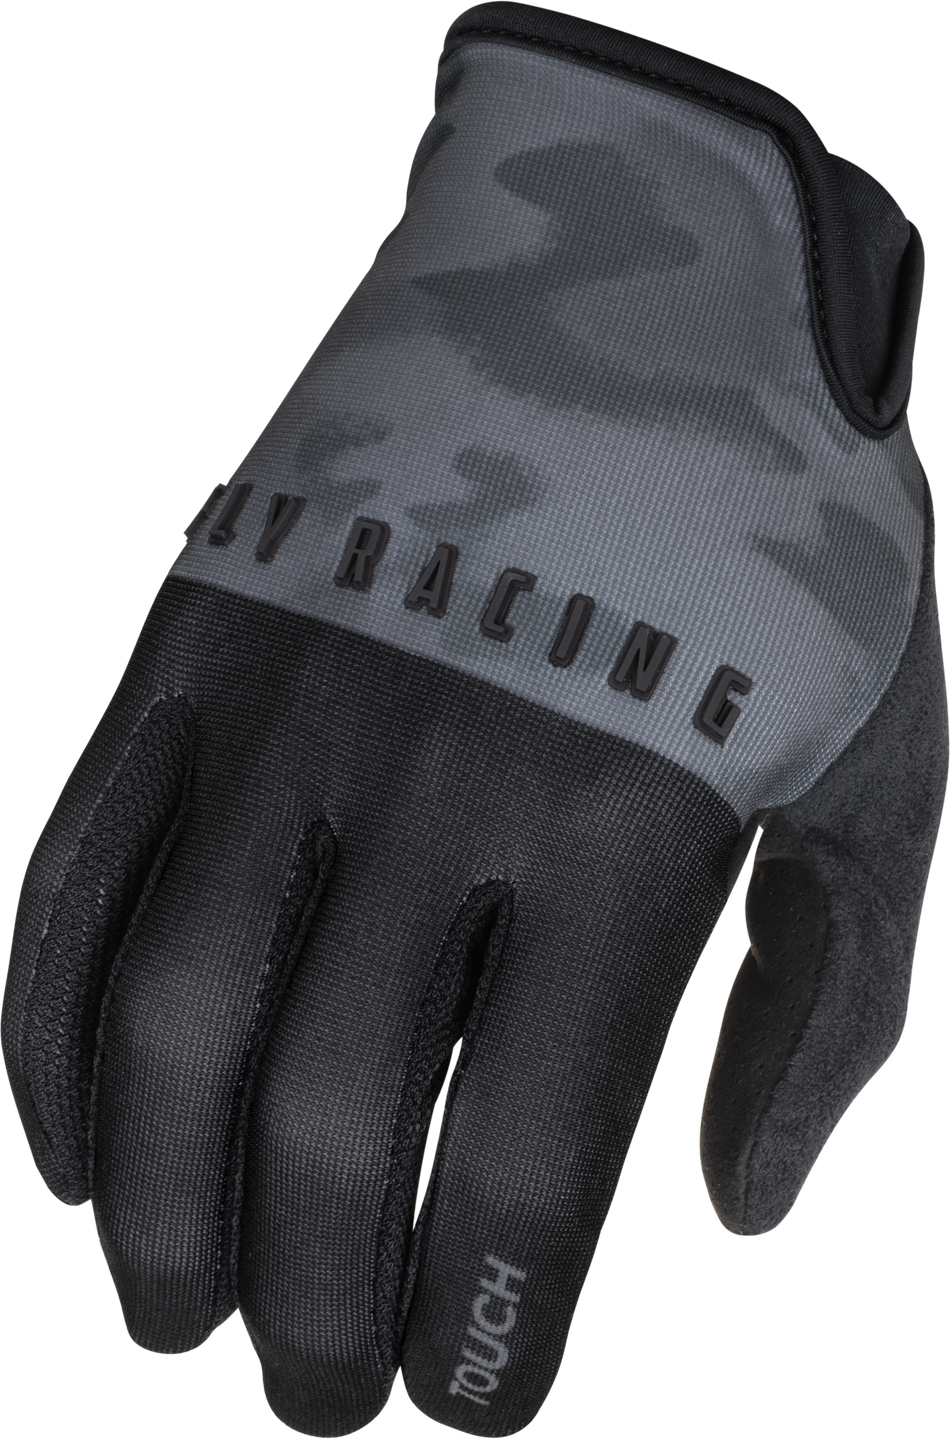 FLY RACING Media Gloves Black/Grey Camo Lg 350-0121L